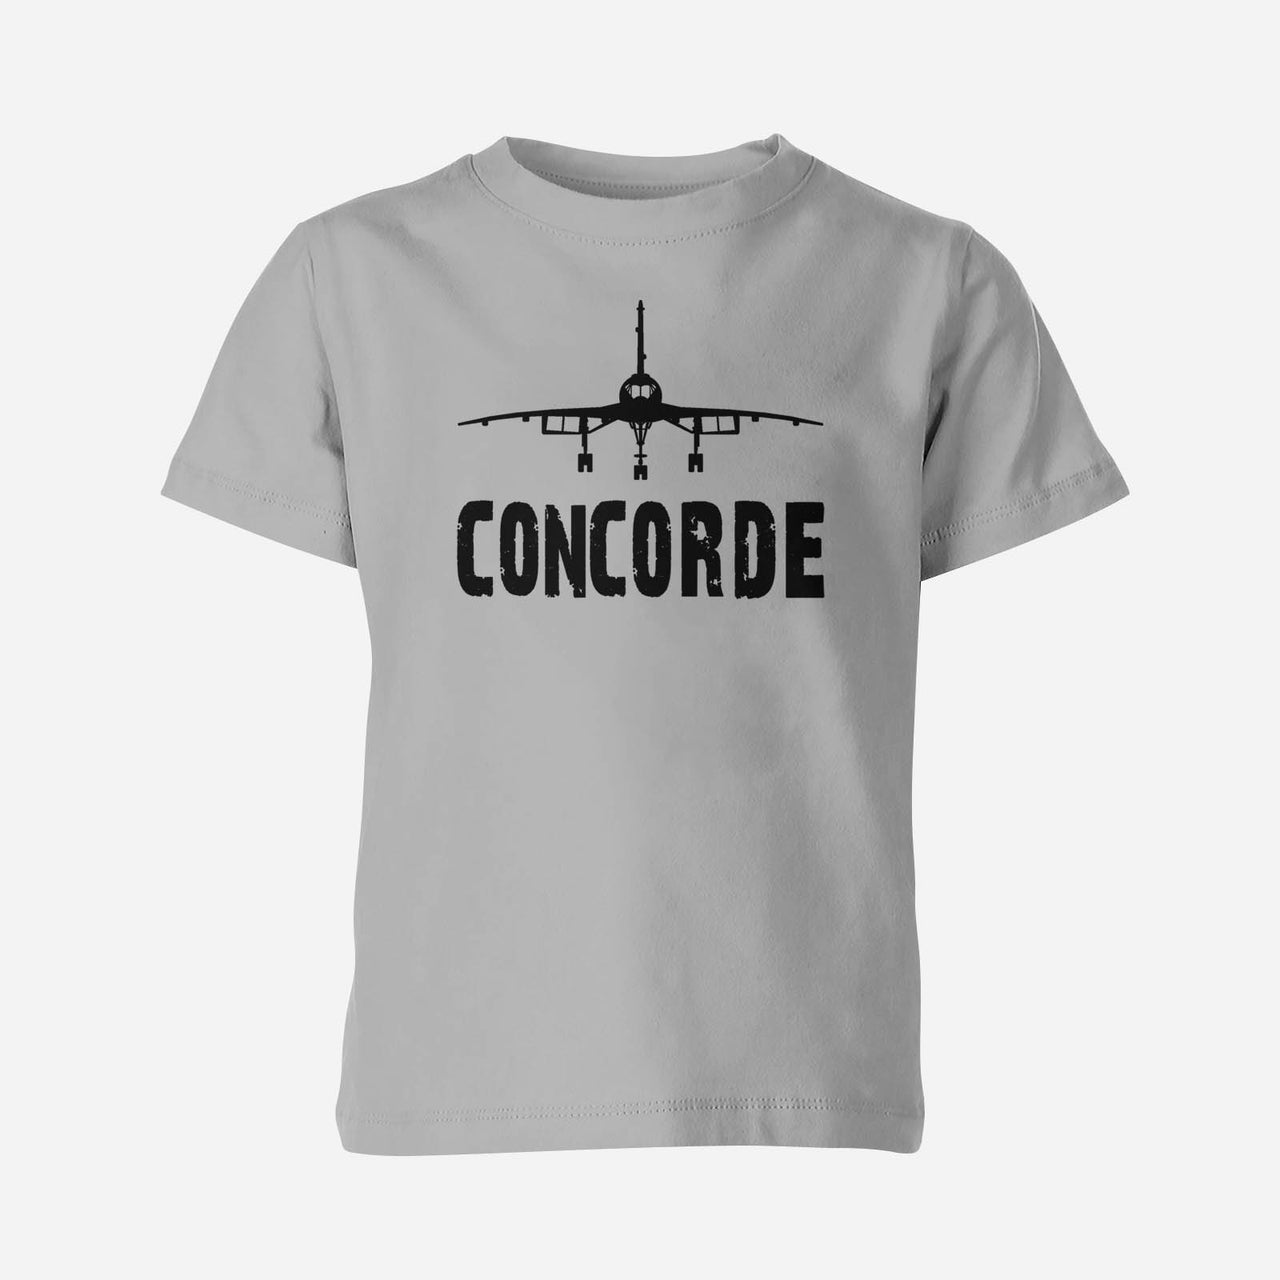 Concorde & Plane Designed Children T-Shirts